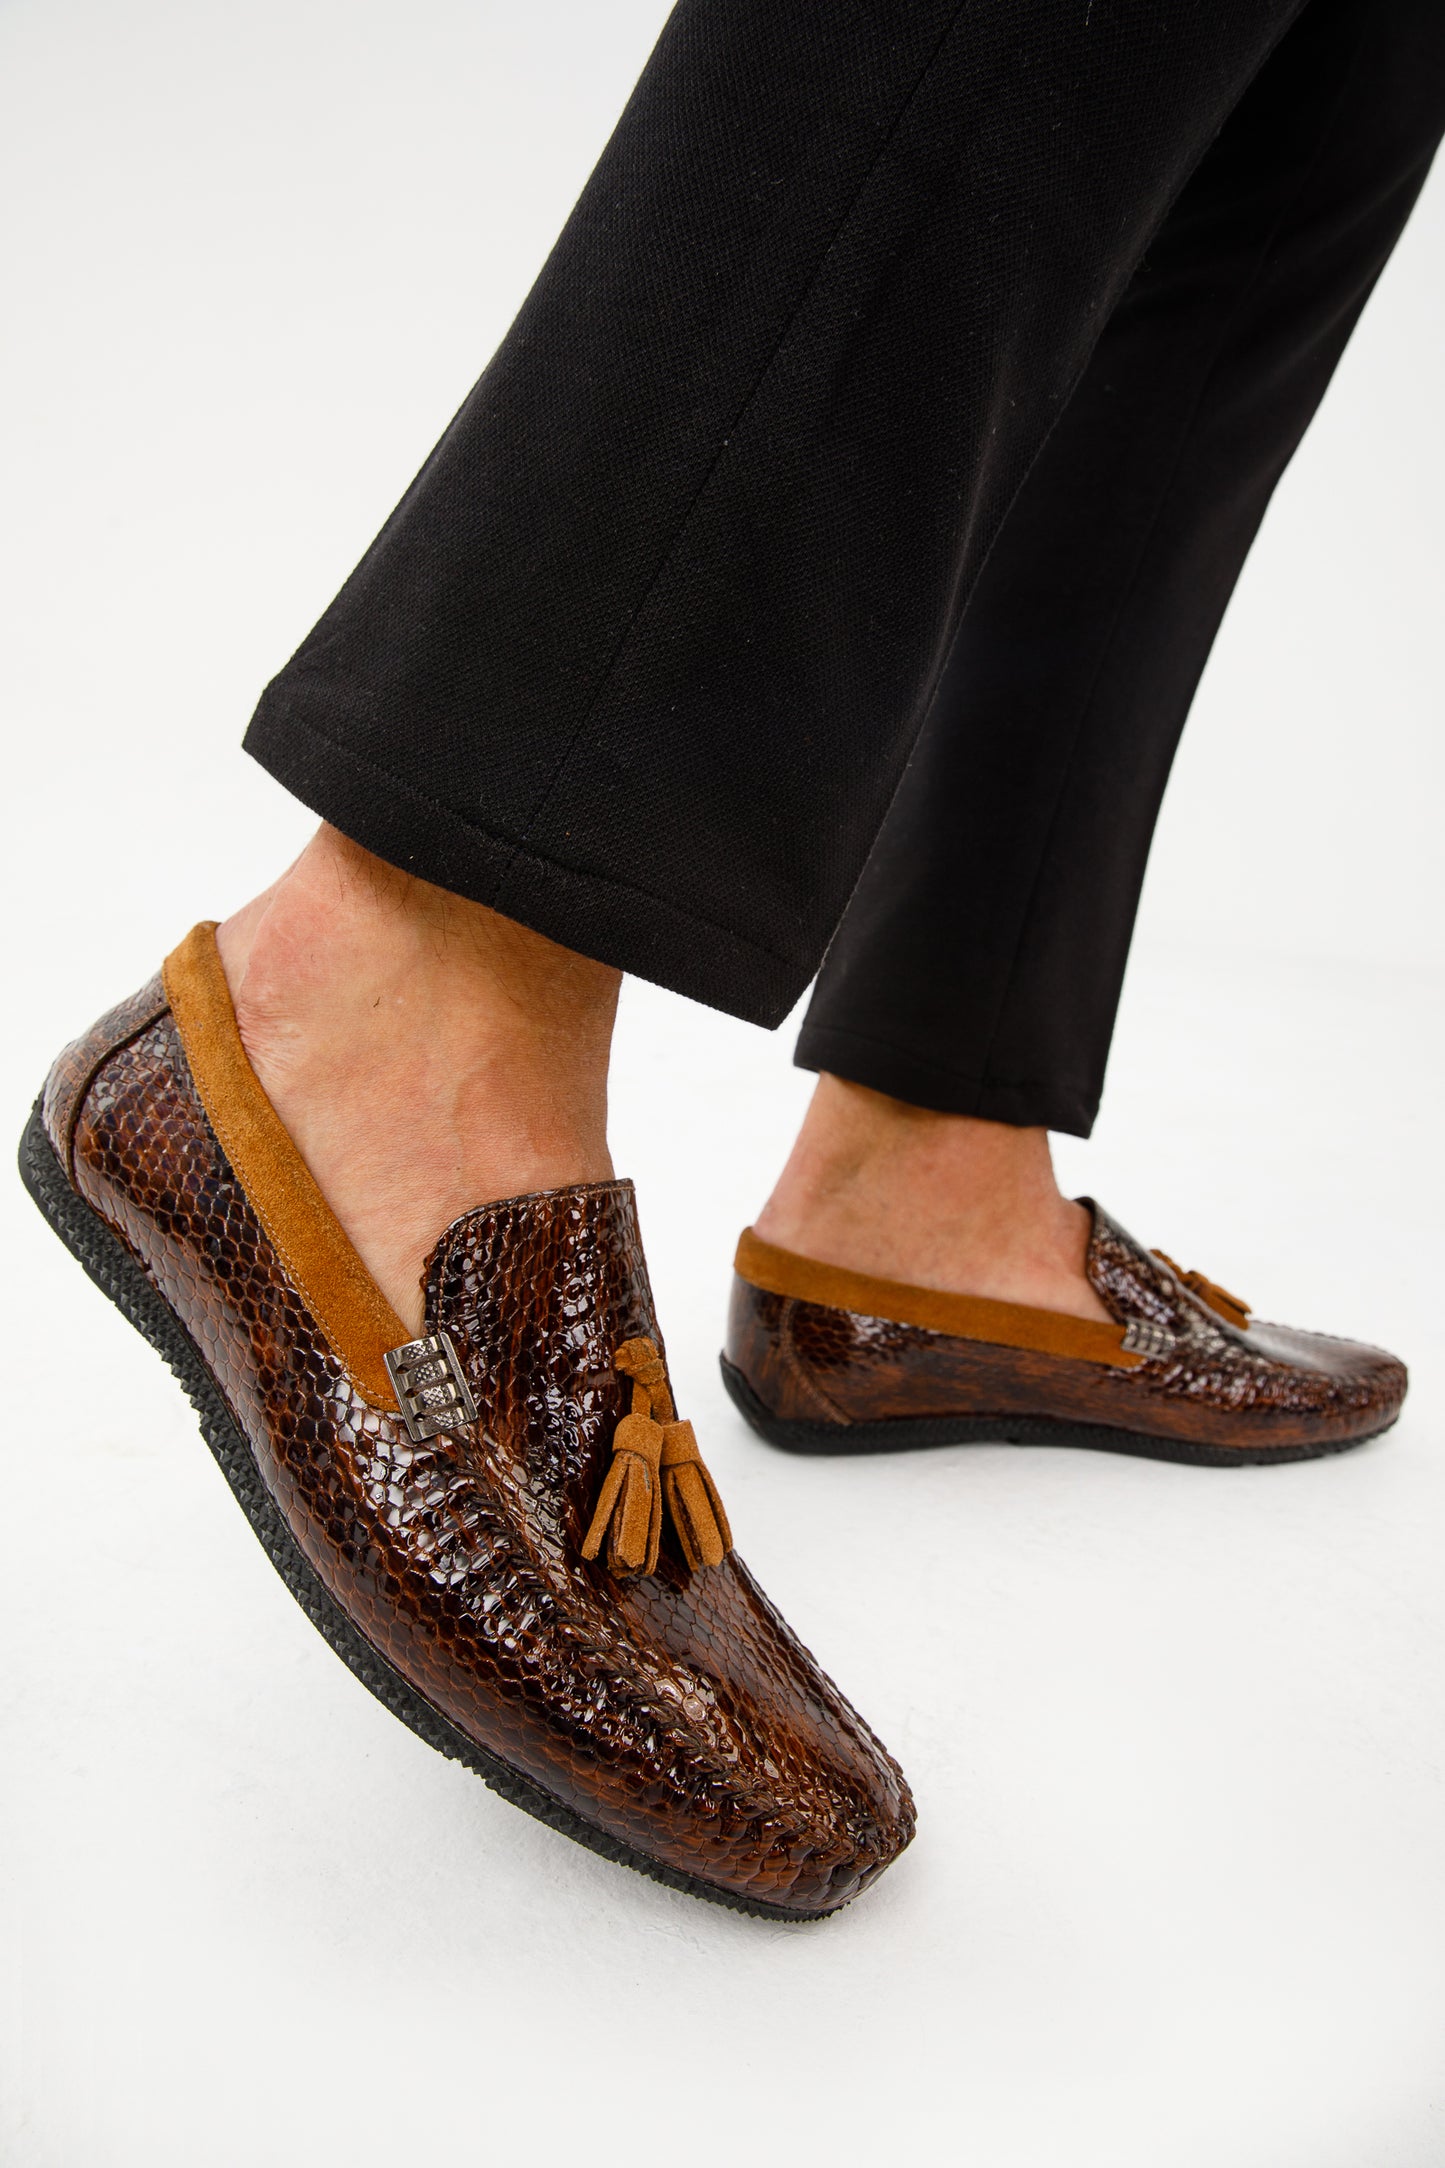 The Cordova Tan Patent Leather Tassel Loafer Men Shoe